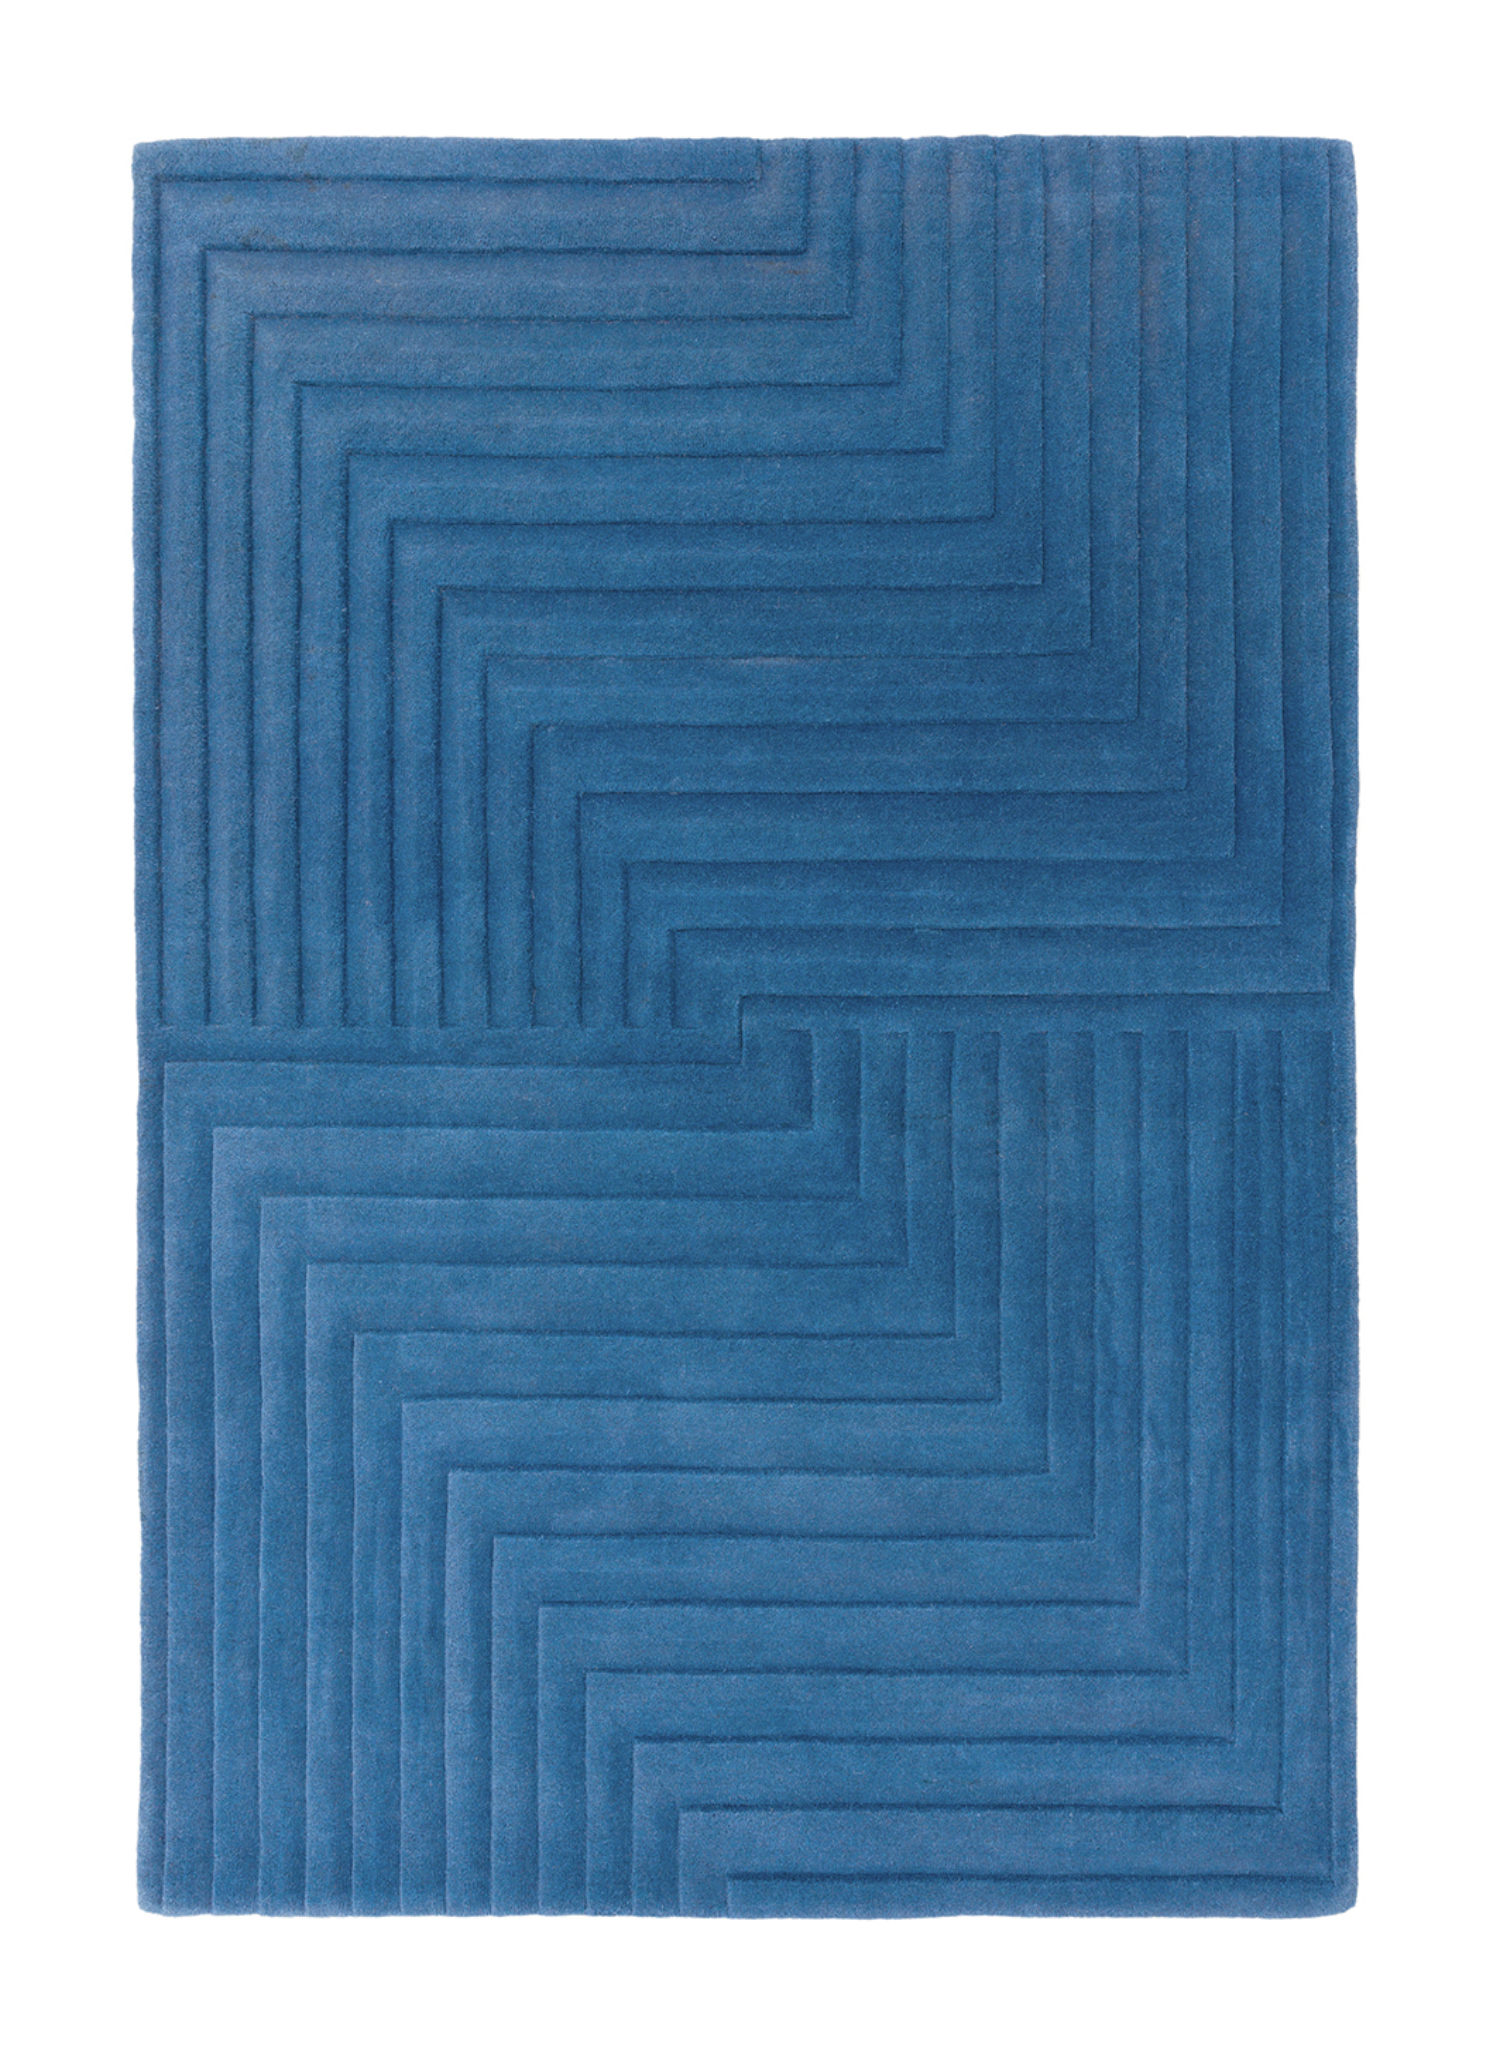 Sophisticated 3D sculptured rug, expertly hand carved